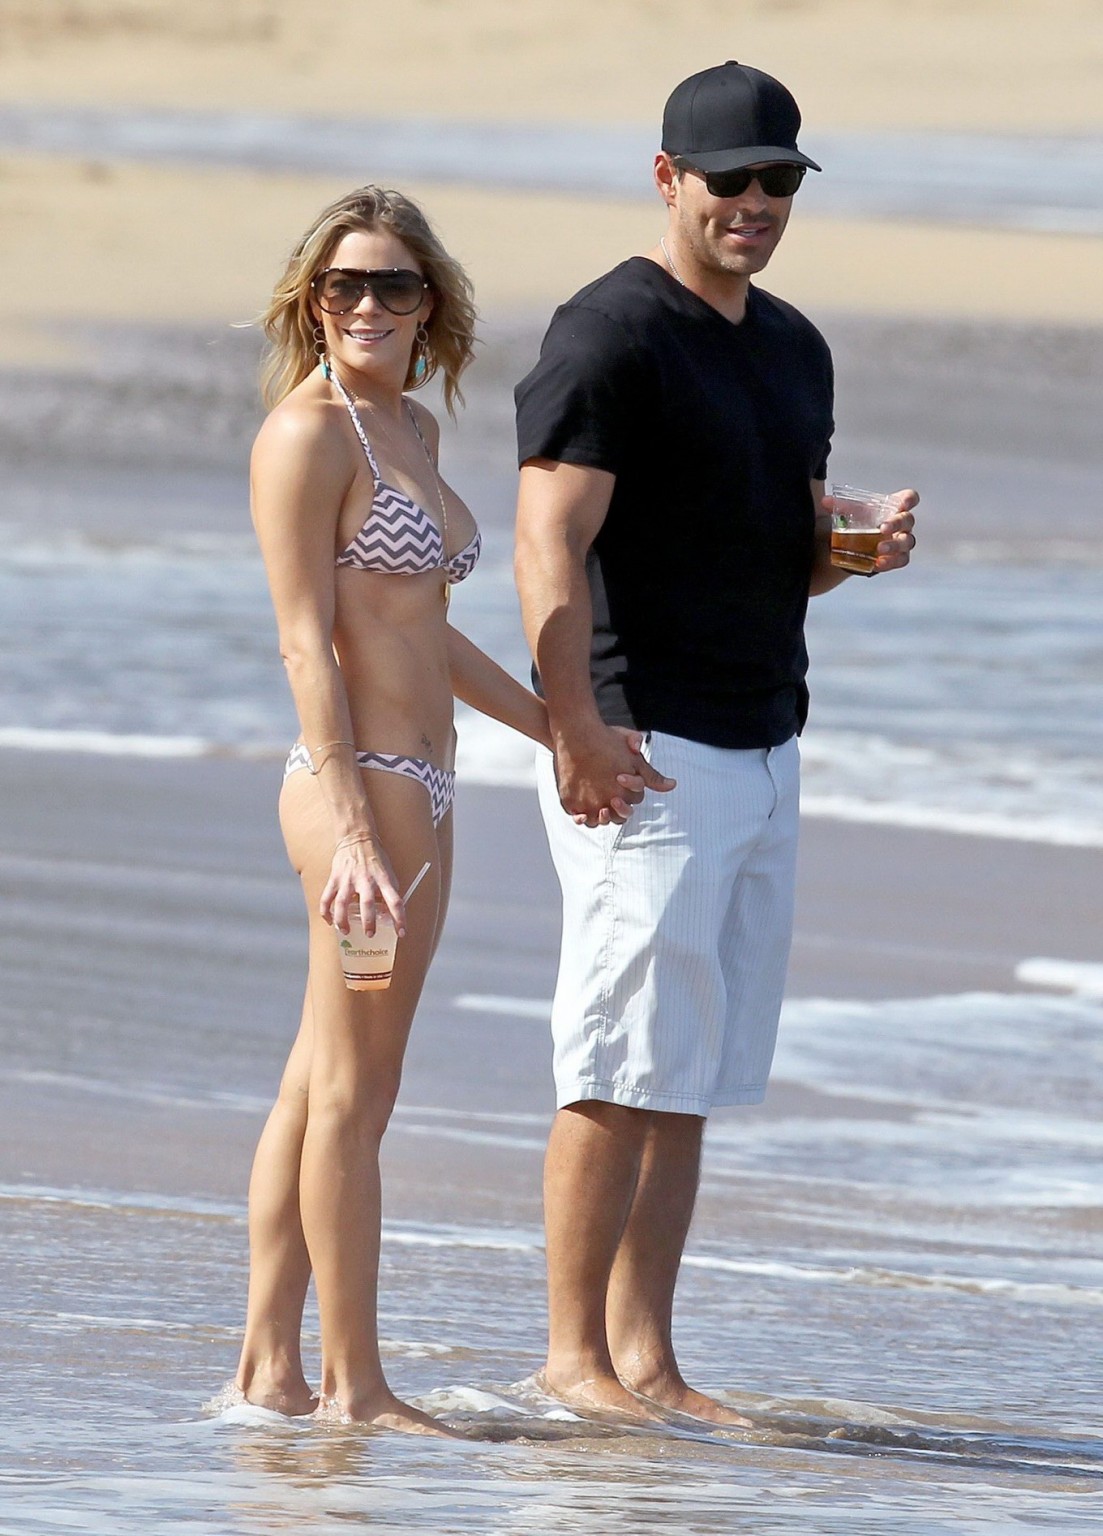 Leann rimes en bikini avec son mari sur une plage hawaïenne
 #75276943